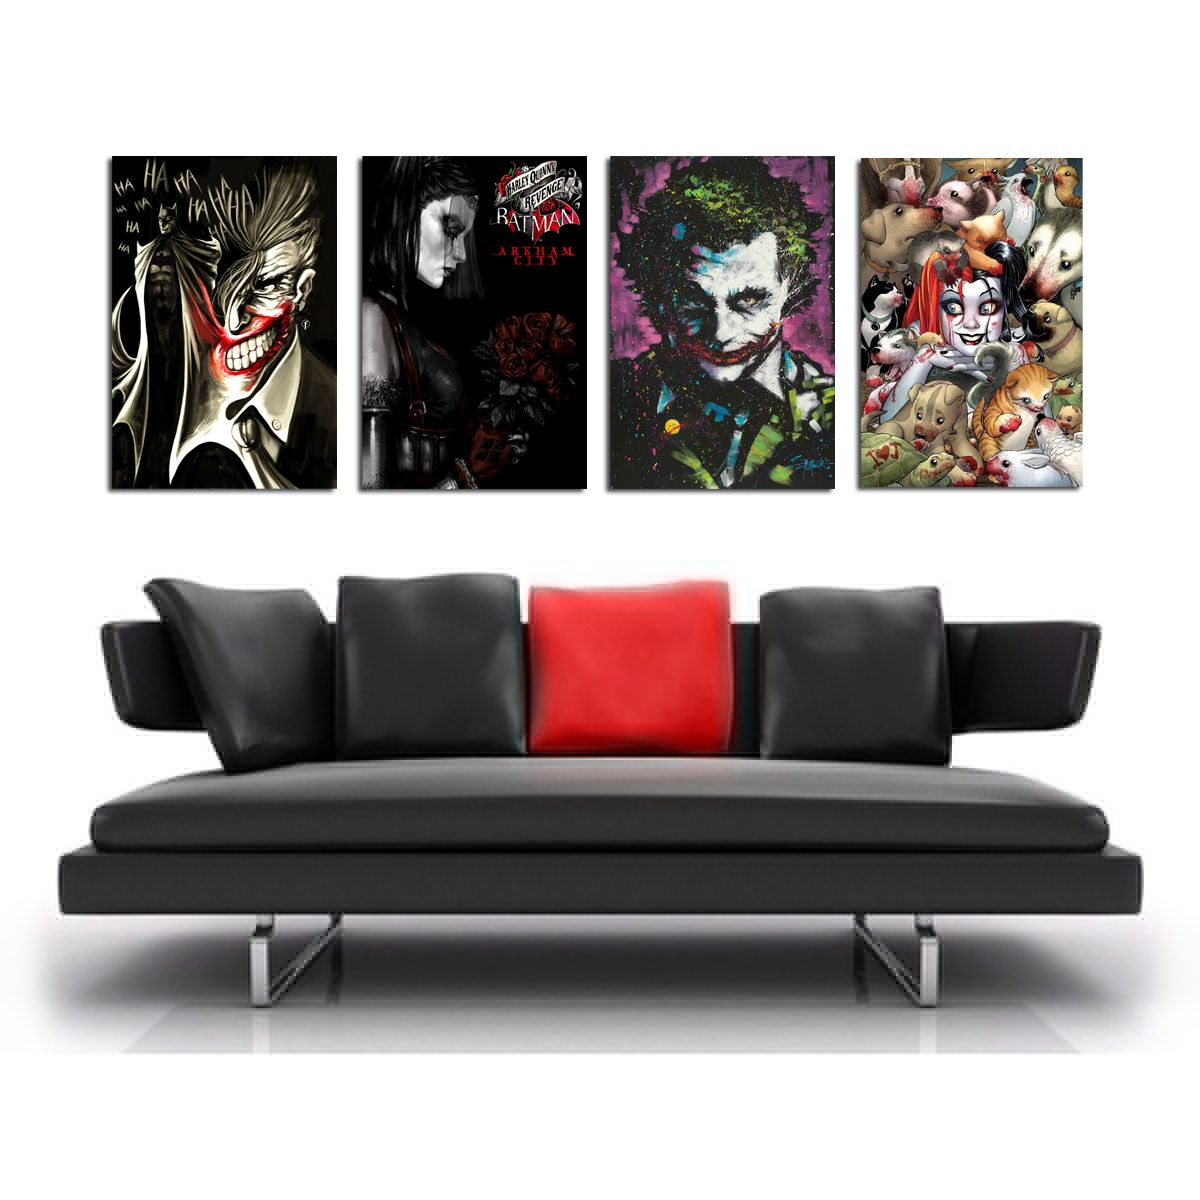 2020 Batman Joker Harley Quinn 3 Canvas Prints Wall Art Oil Painting Home Decor Unframed Framed From Chai2018 14 53 Dhgate Com